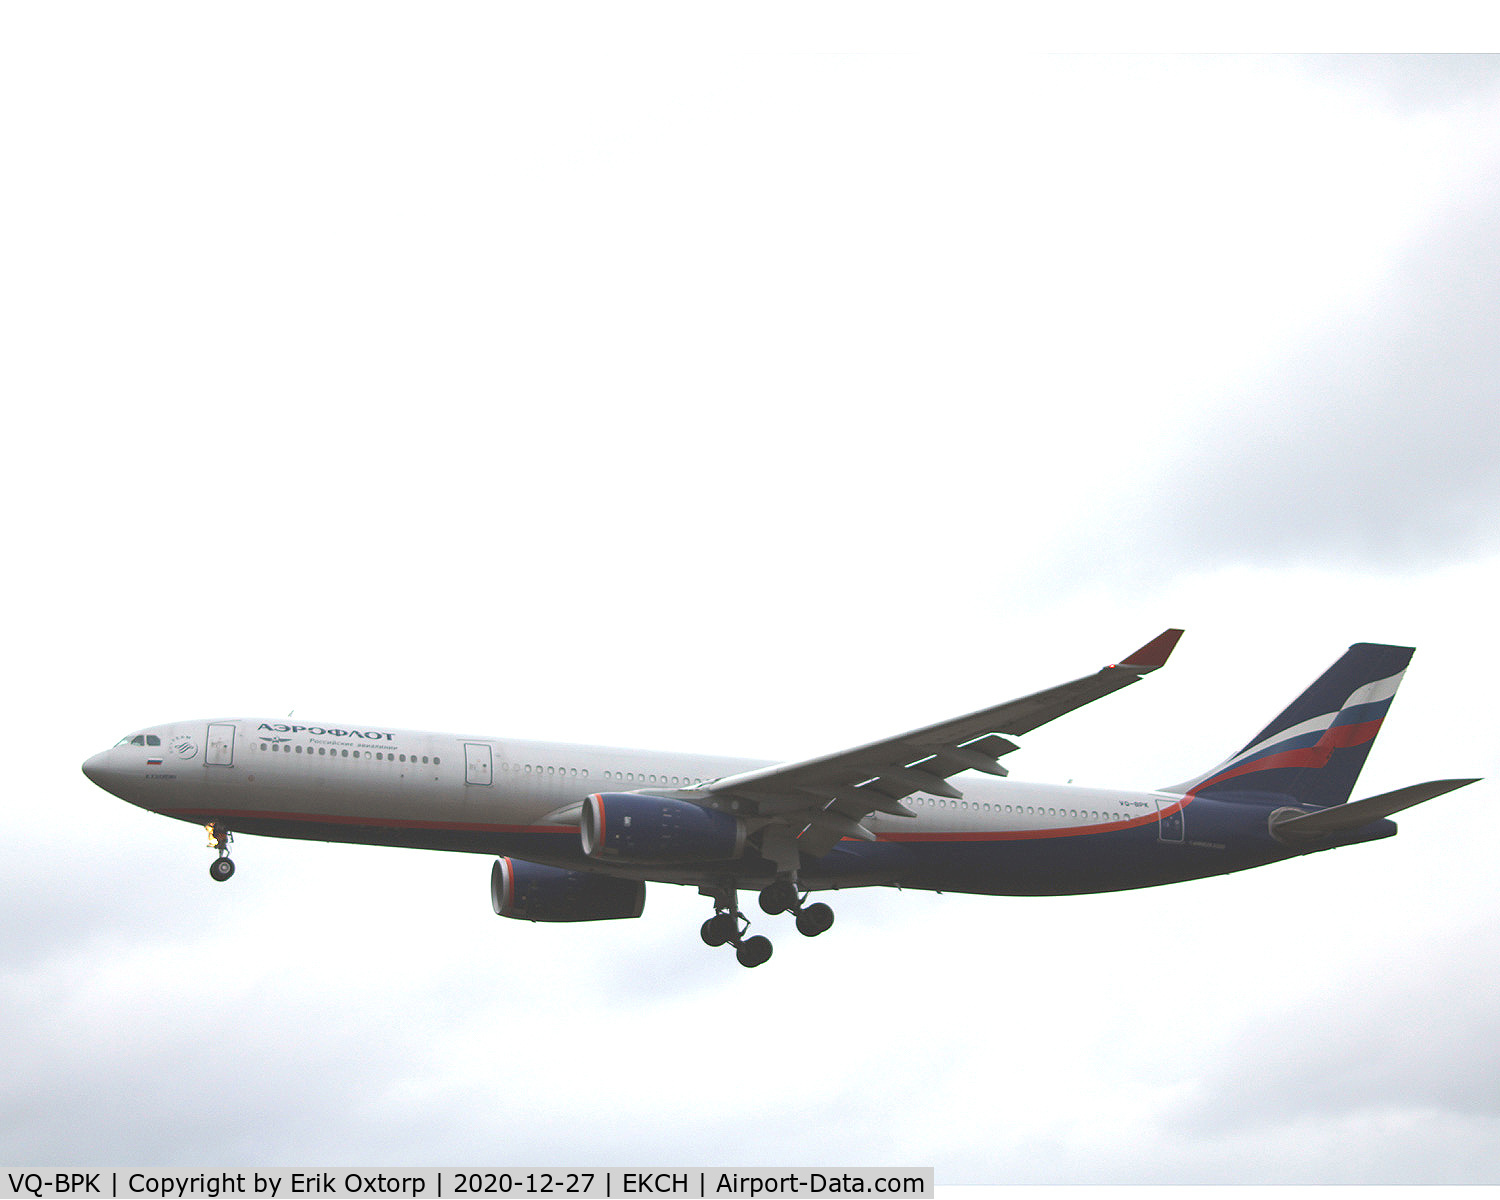 VQ-BPK, 2012 Airbus A330-343X C/N 1345, VQ-BPK landing rw 22L